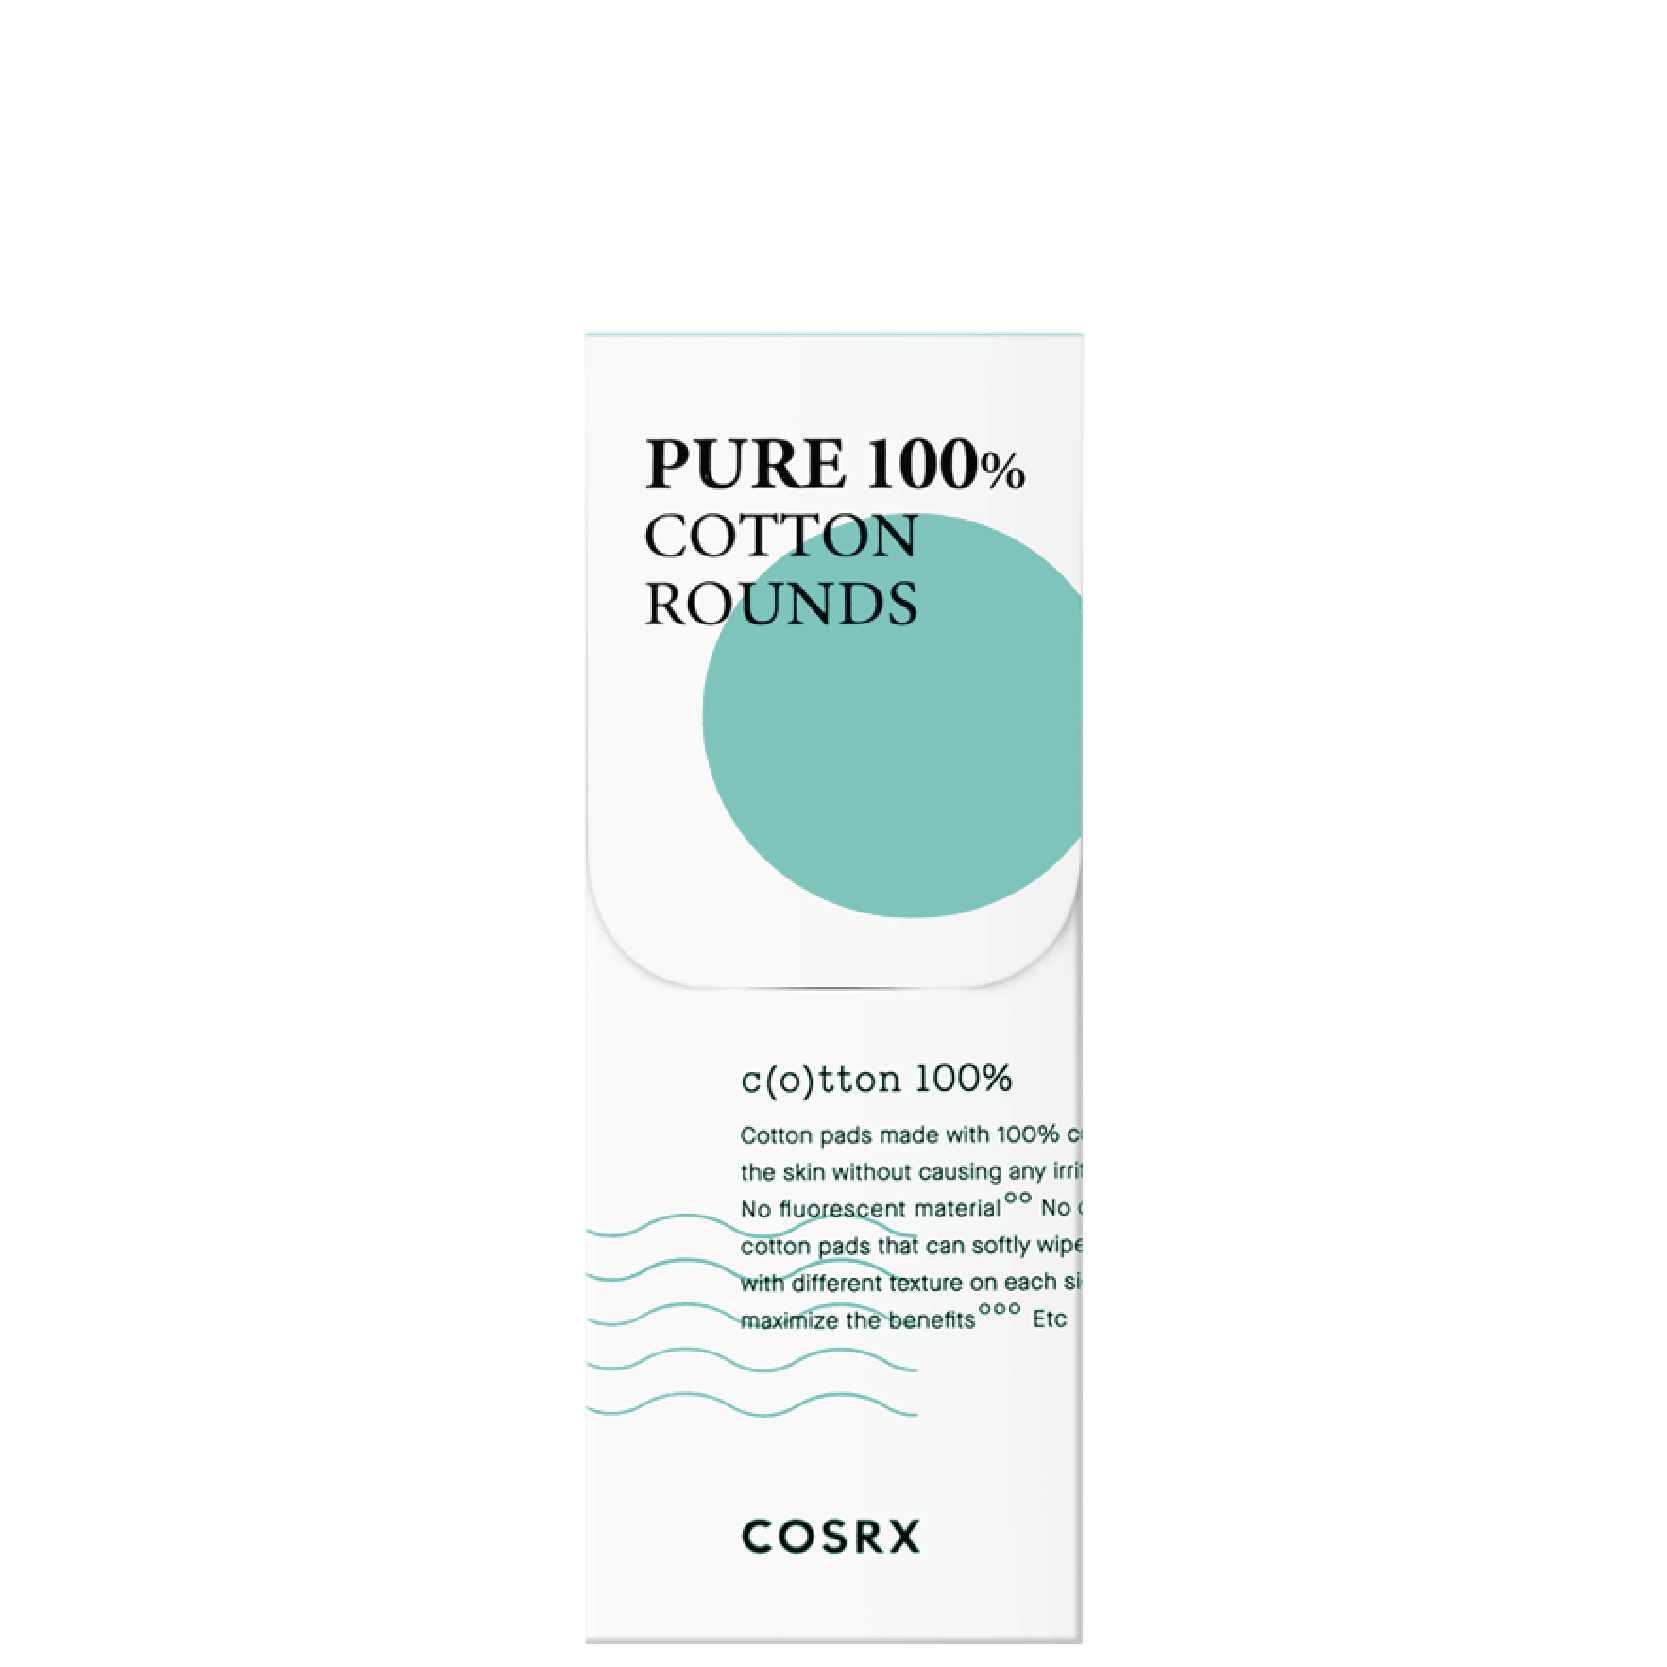 Cosrx Pure 100% Cotton Rounds Cosrx